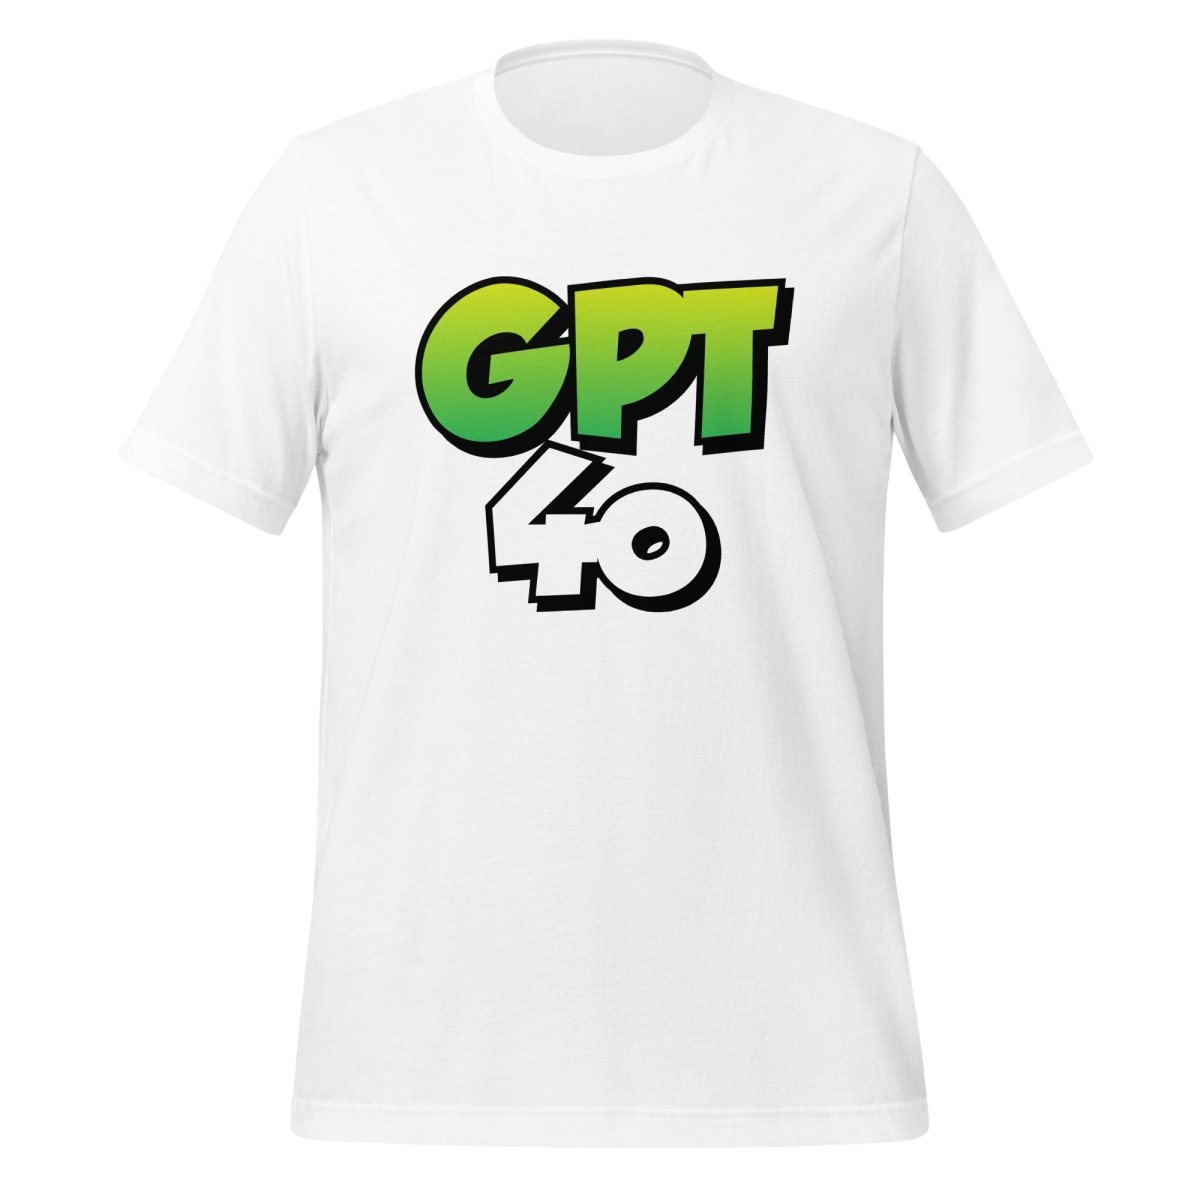 GPT 4o Ben 10 - Style T - Shirt (unisex) - White - AI Store